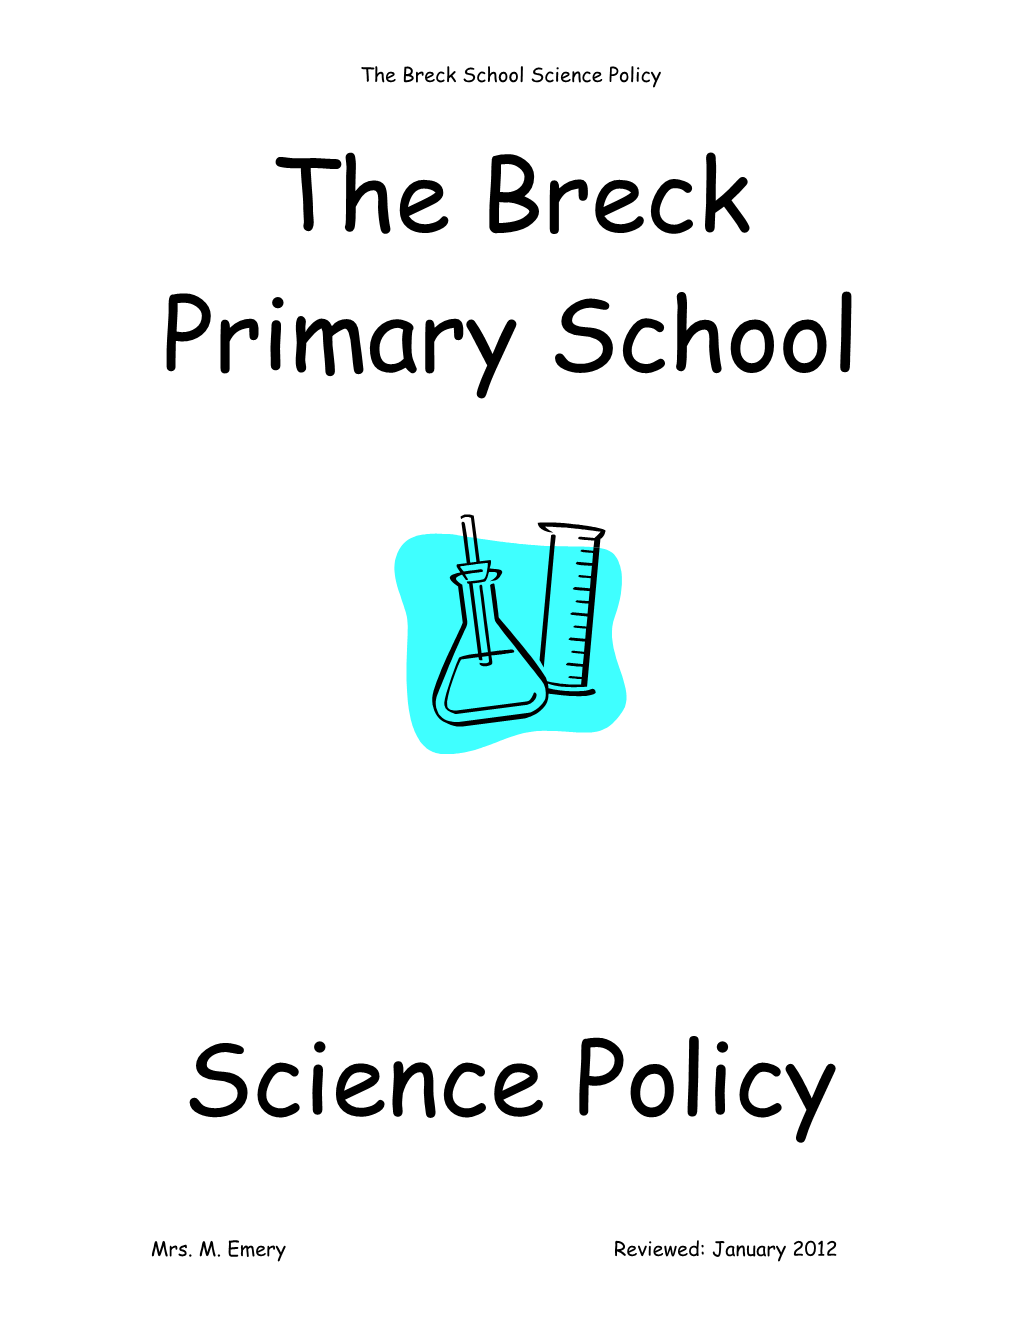 The Breck Primary School